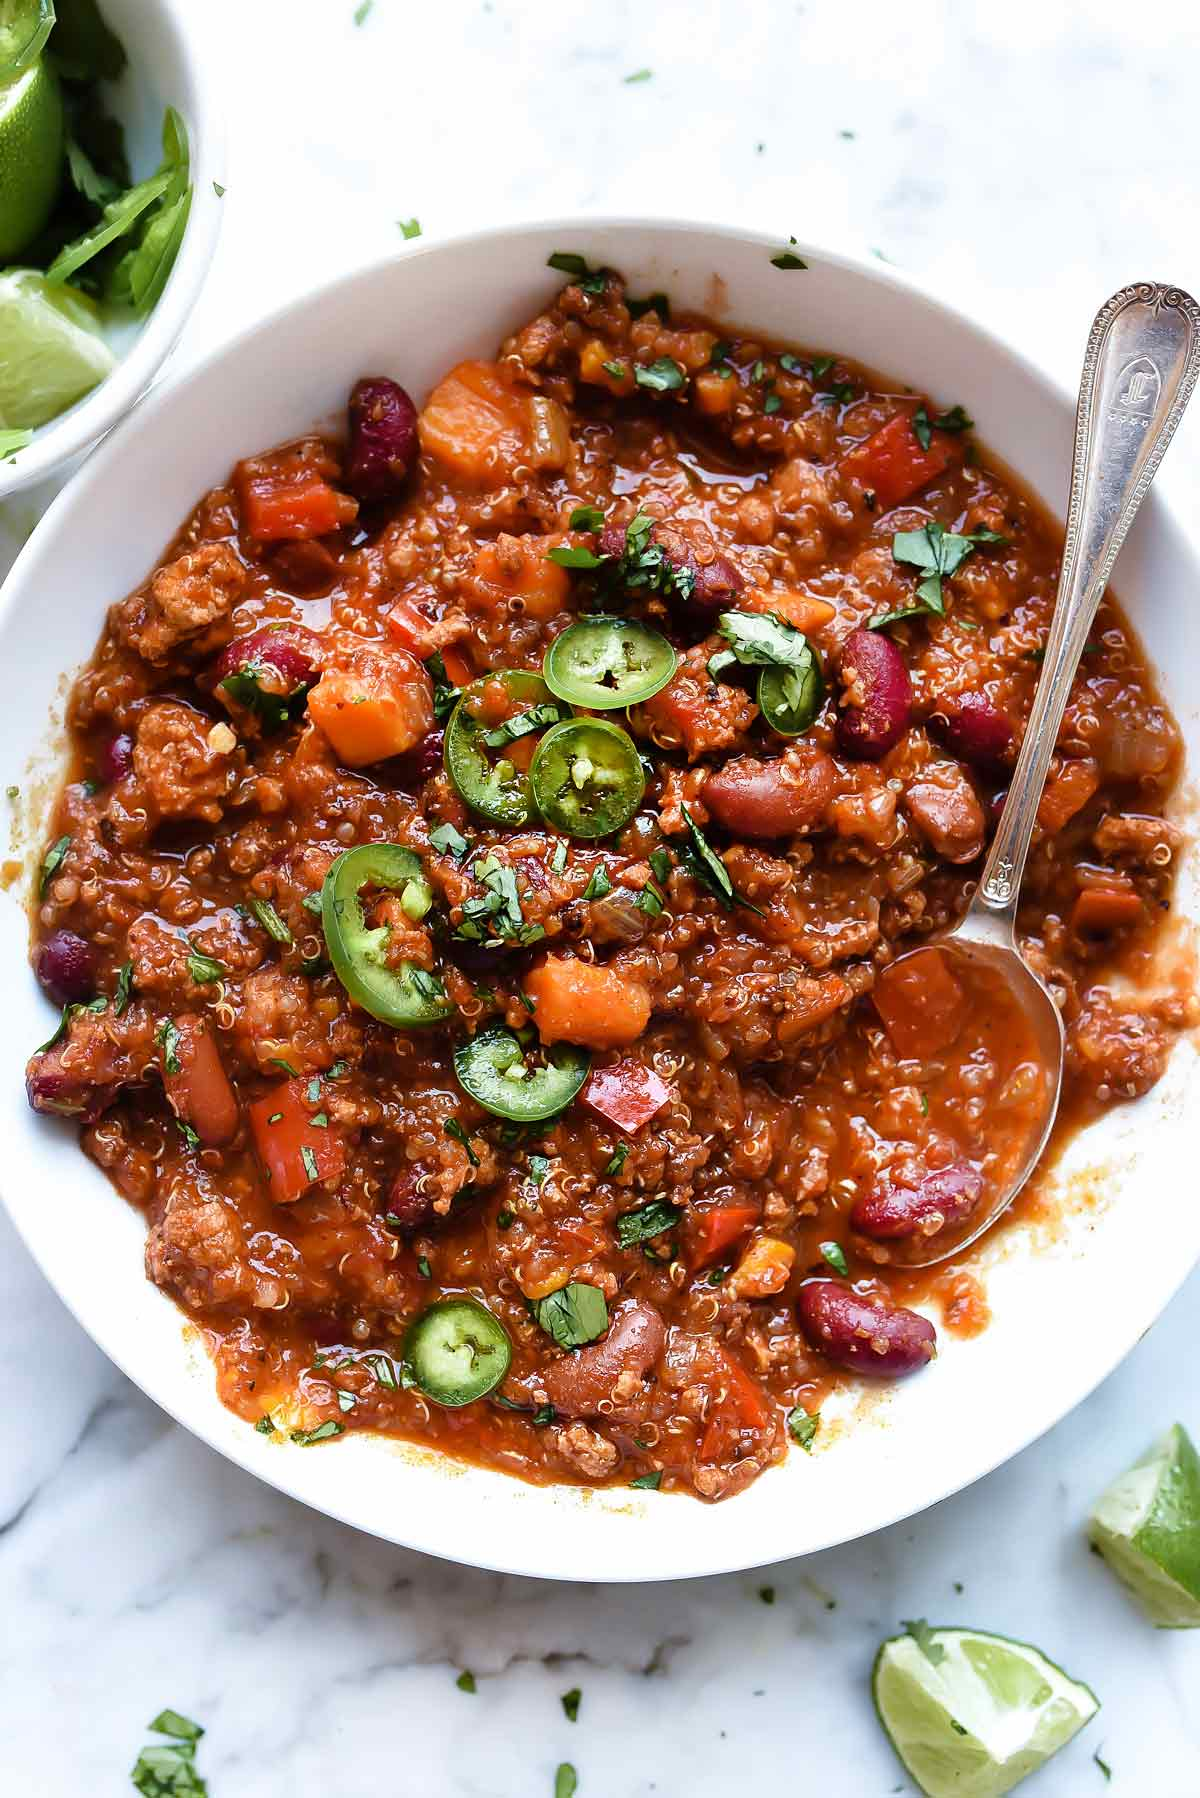 Slow Cooker Turkey and Sweet Potato Chili with Quinoa | foodiecrush.com #slowcooker #turkey #chili #recipes #turkeychili #sweetpotato #quinoa #instantpot #crockpot